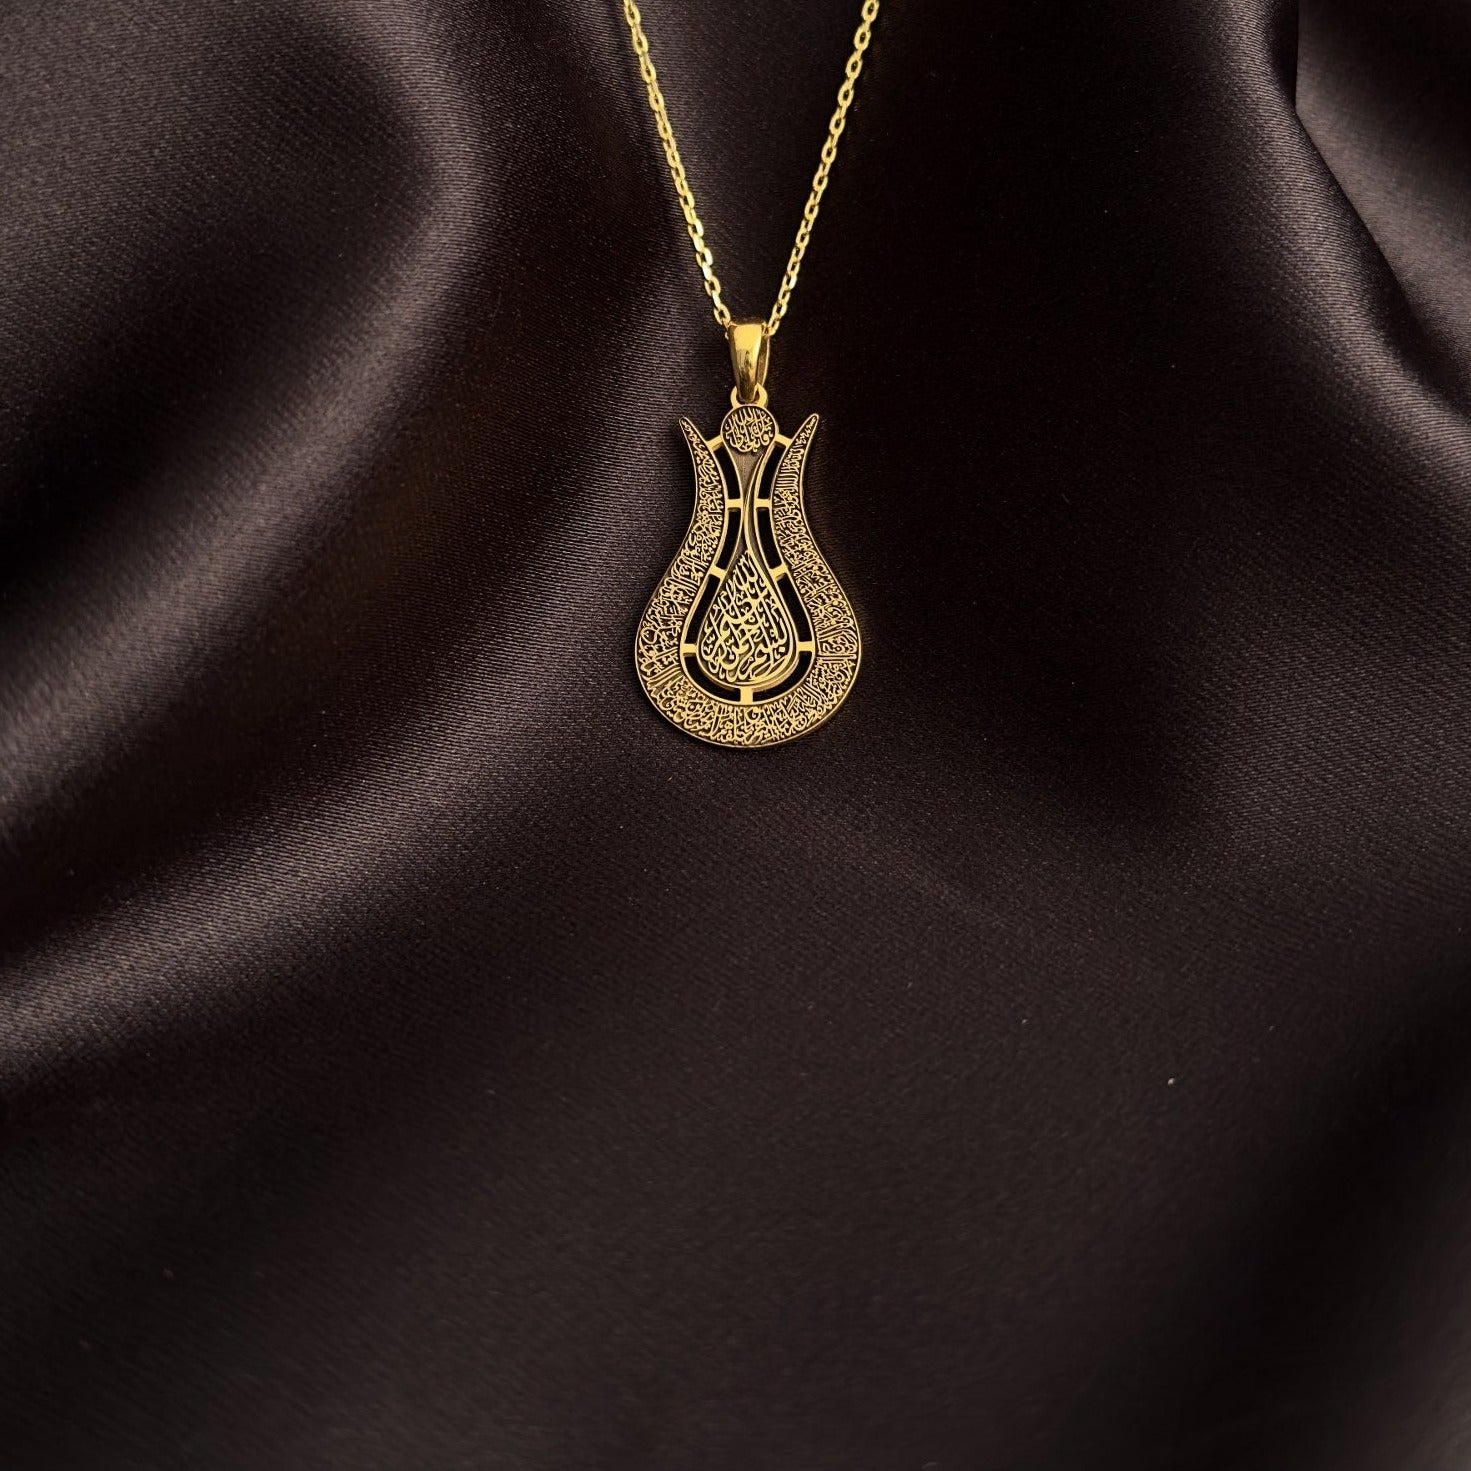 islamic-jewelry-ayatul-kursi-tulip-islamic-necklace-18k-gold-pendant-on-925-silver-affordable-price-quality-craftsmanship-shukranislamicart